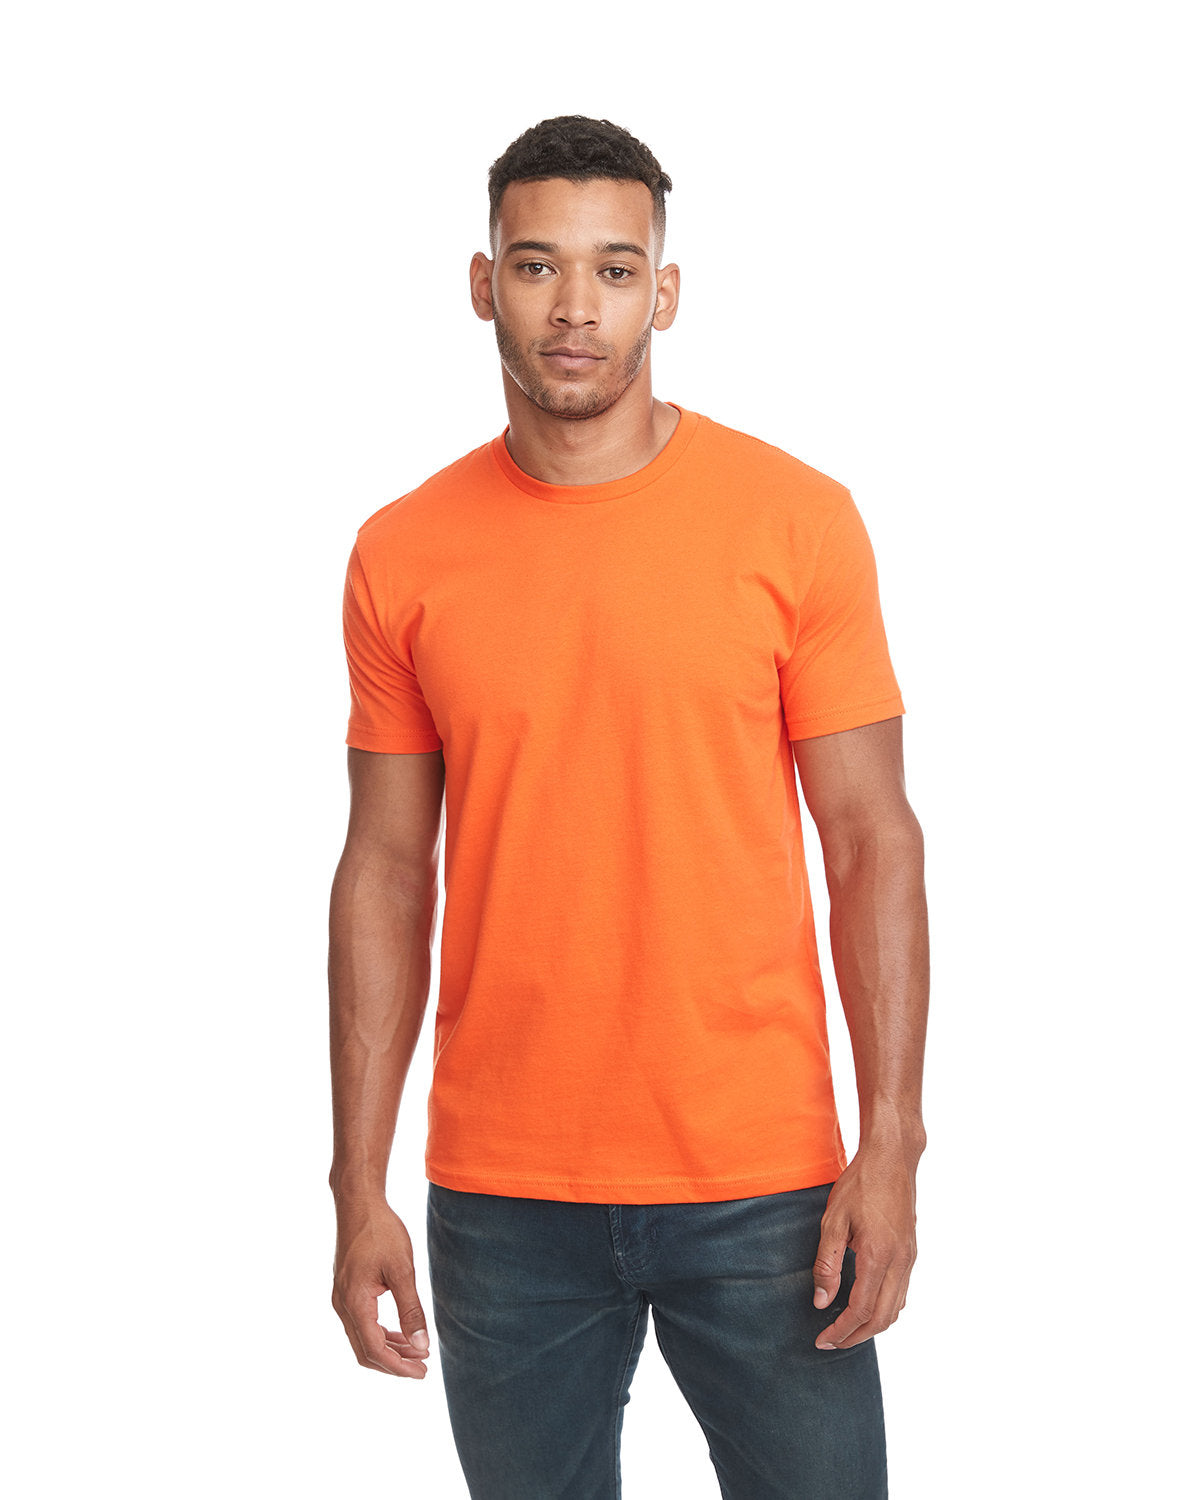 Classic Orange 100% Cotton Next Level T-shirt 